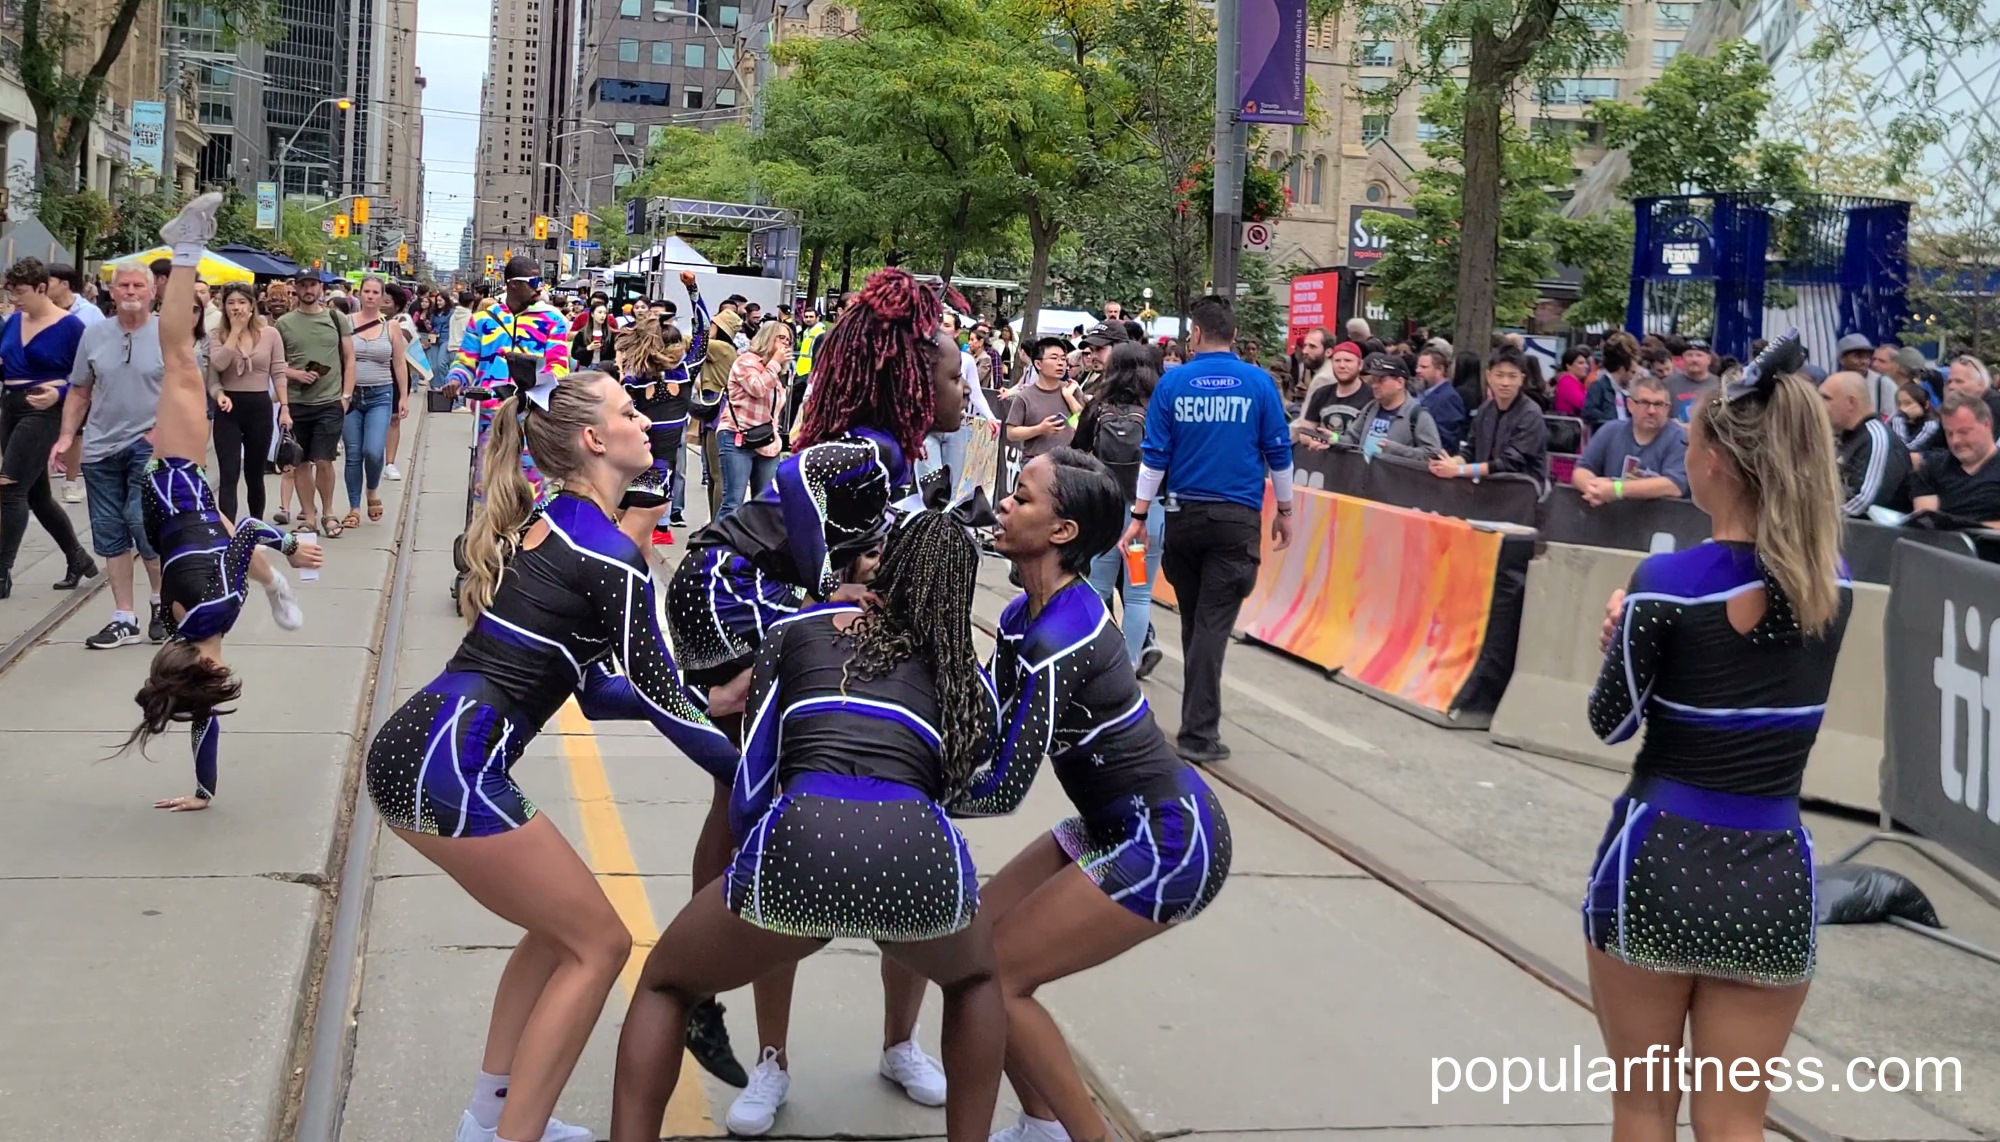 Cheerleaders lifting a cheerleader to complete their cheerleading routine